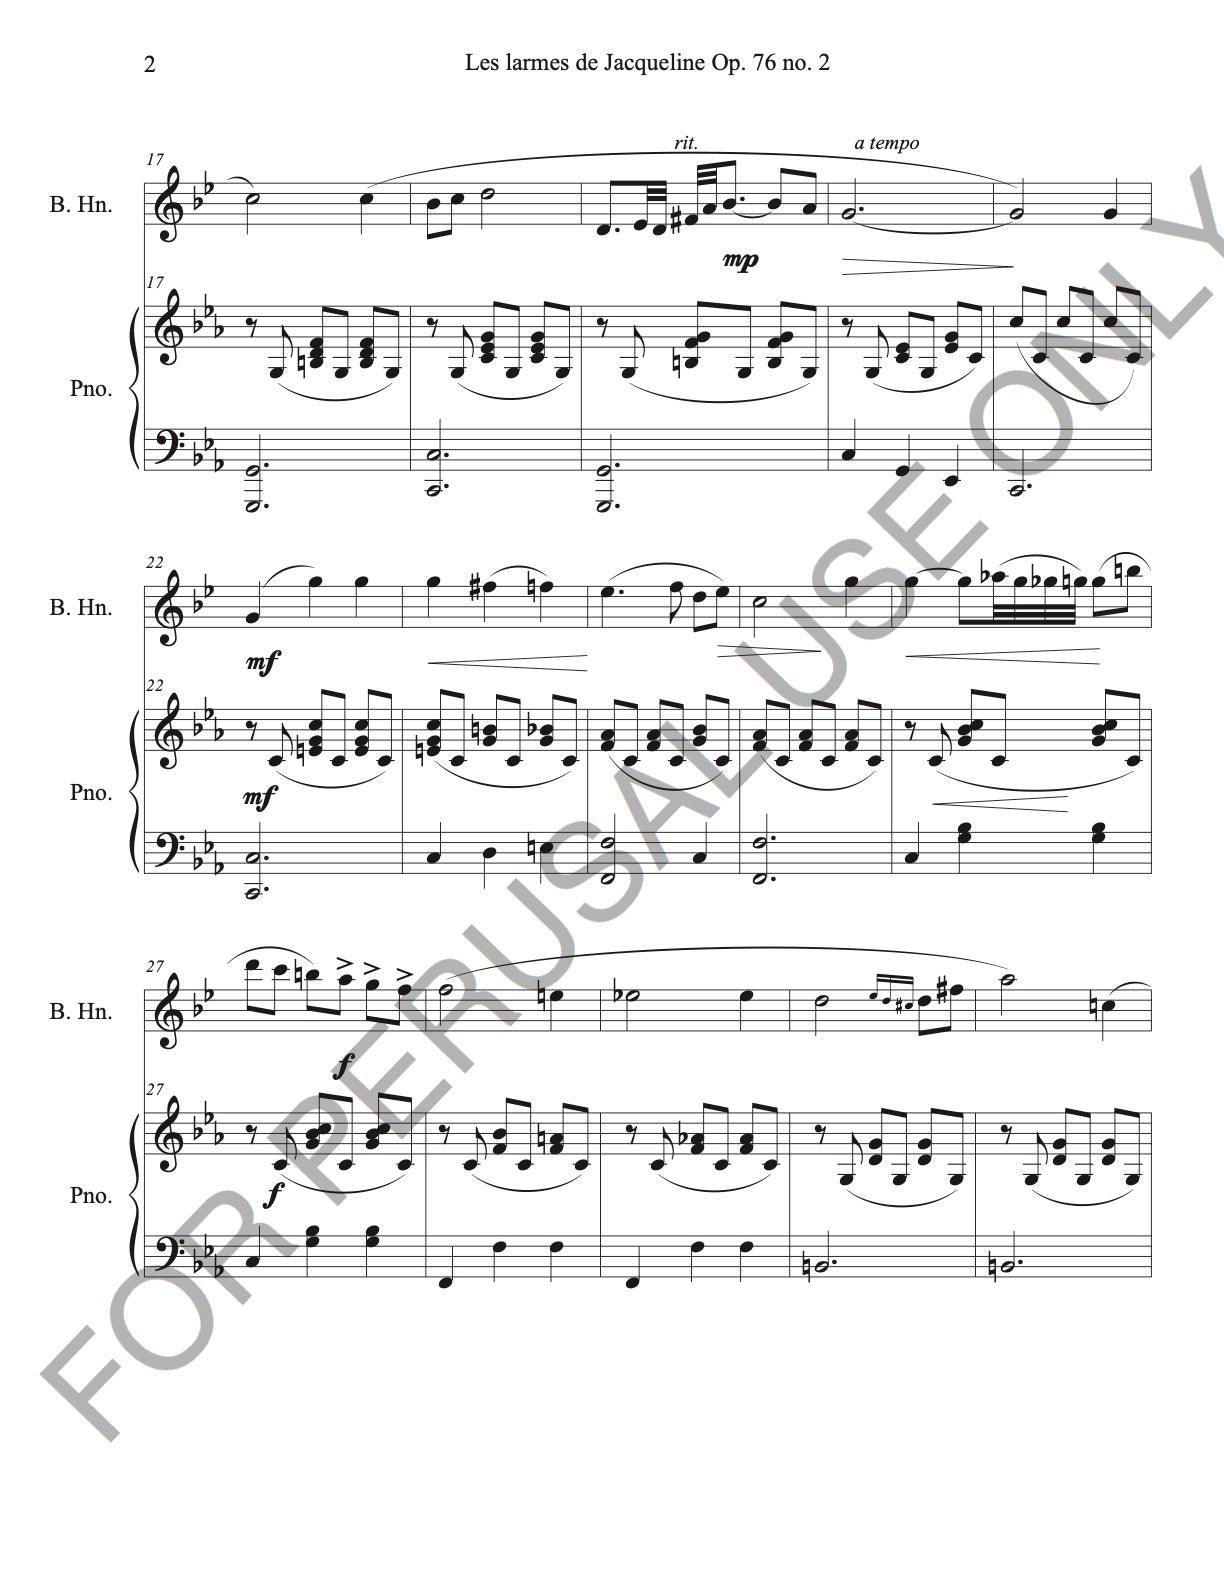 Basset Horn and Piano Sheet music: Les larmes de Jacqueline - Offenbach - ChaipruckMekara